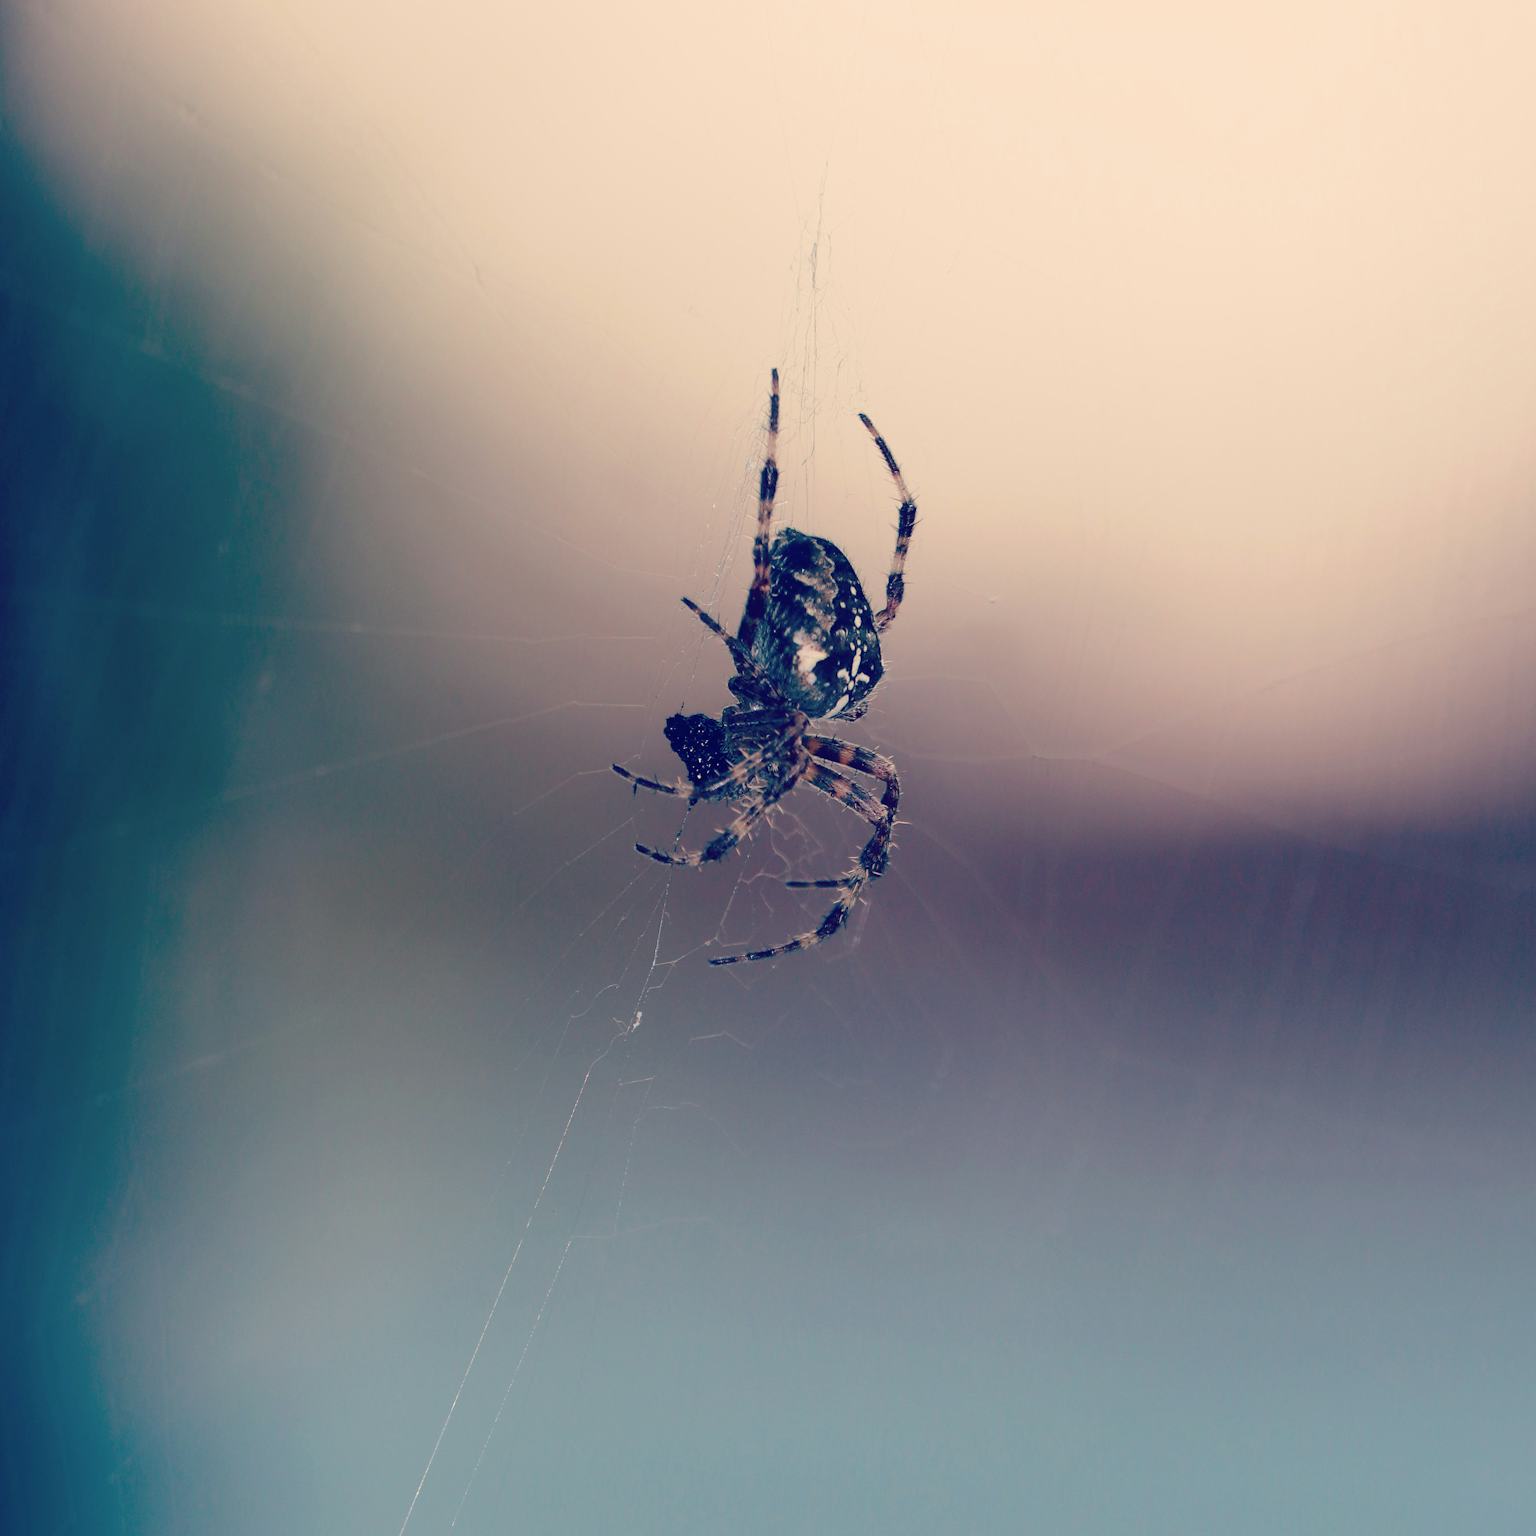 Space Spiders Build Webs In An Unusual Way